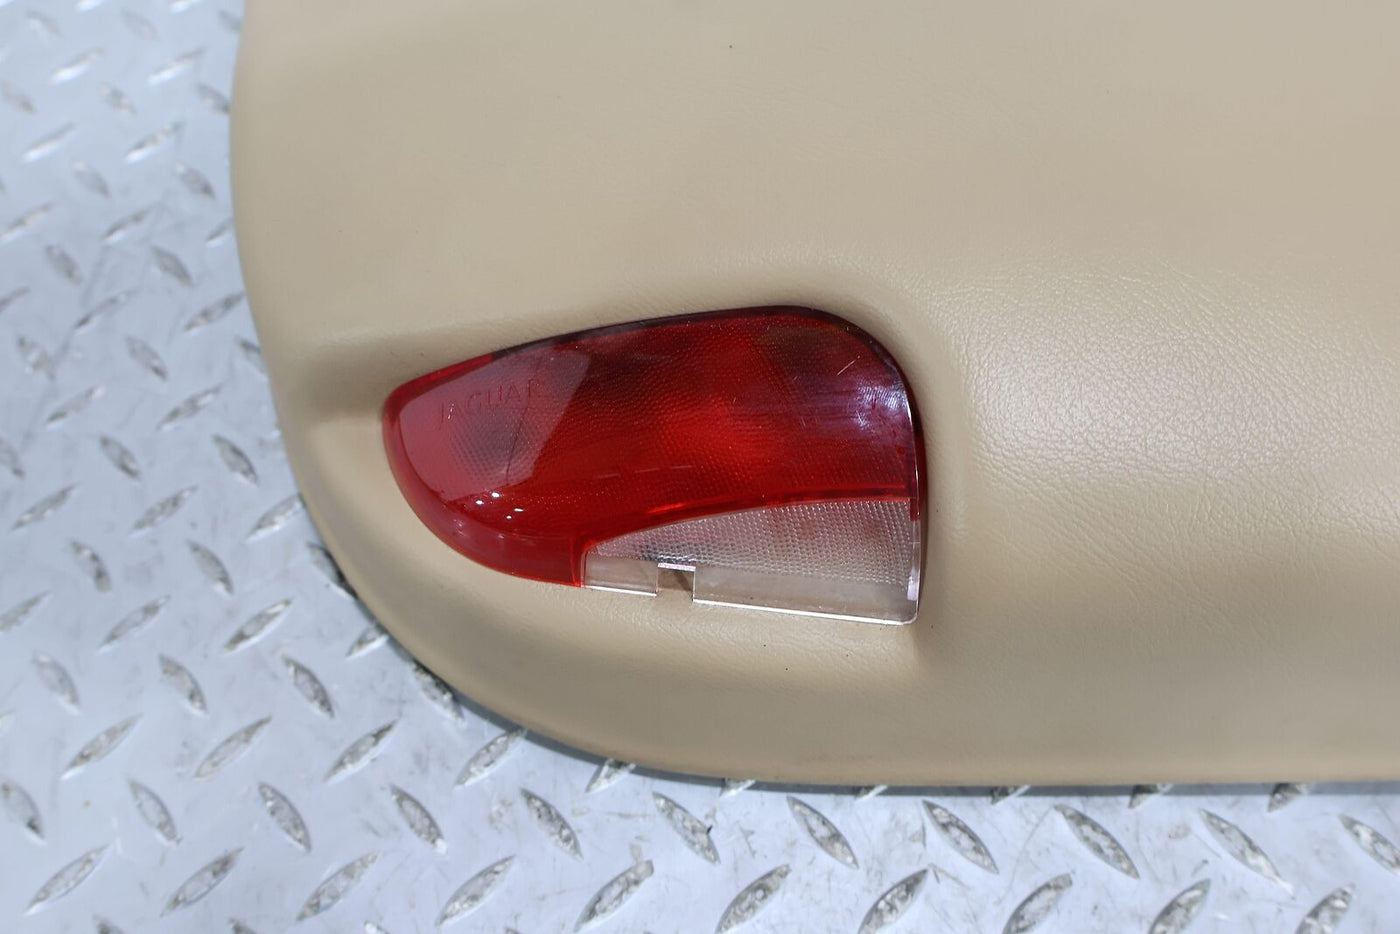 97-02 Jaguar XK8 Left LH Driver Interior Door Trim Panel (Coffee SDC) See Notes